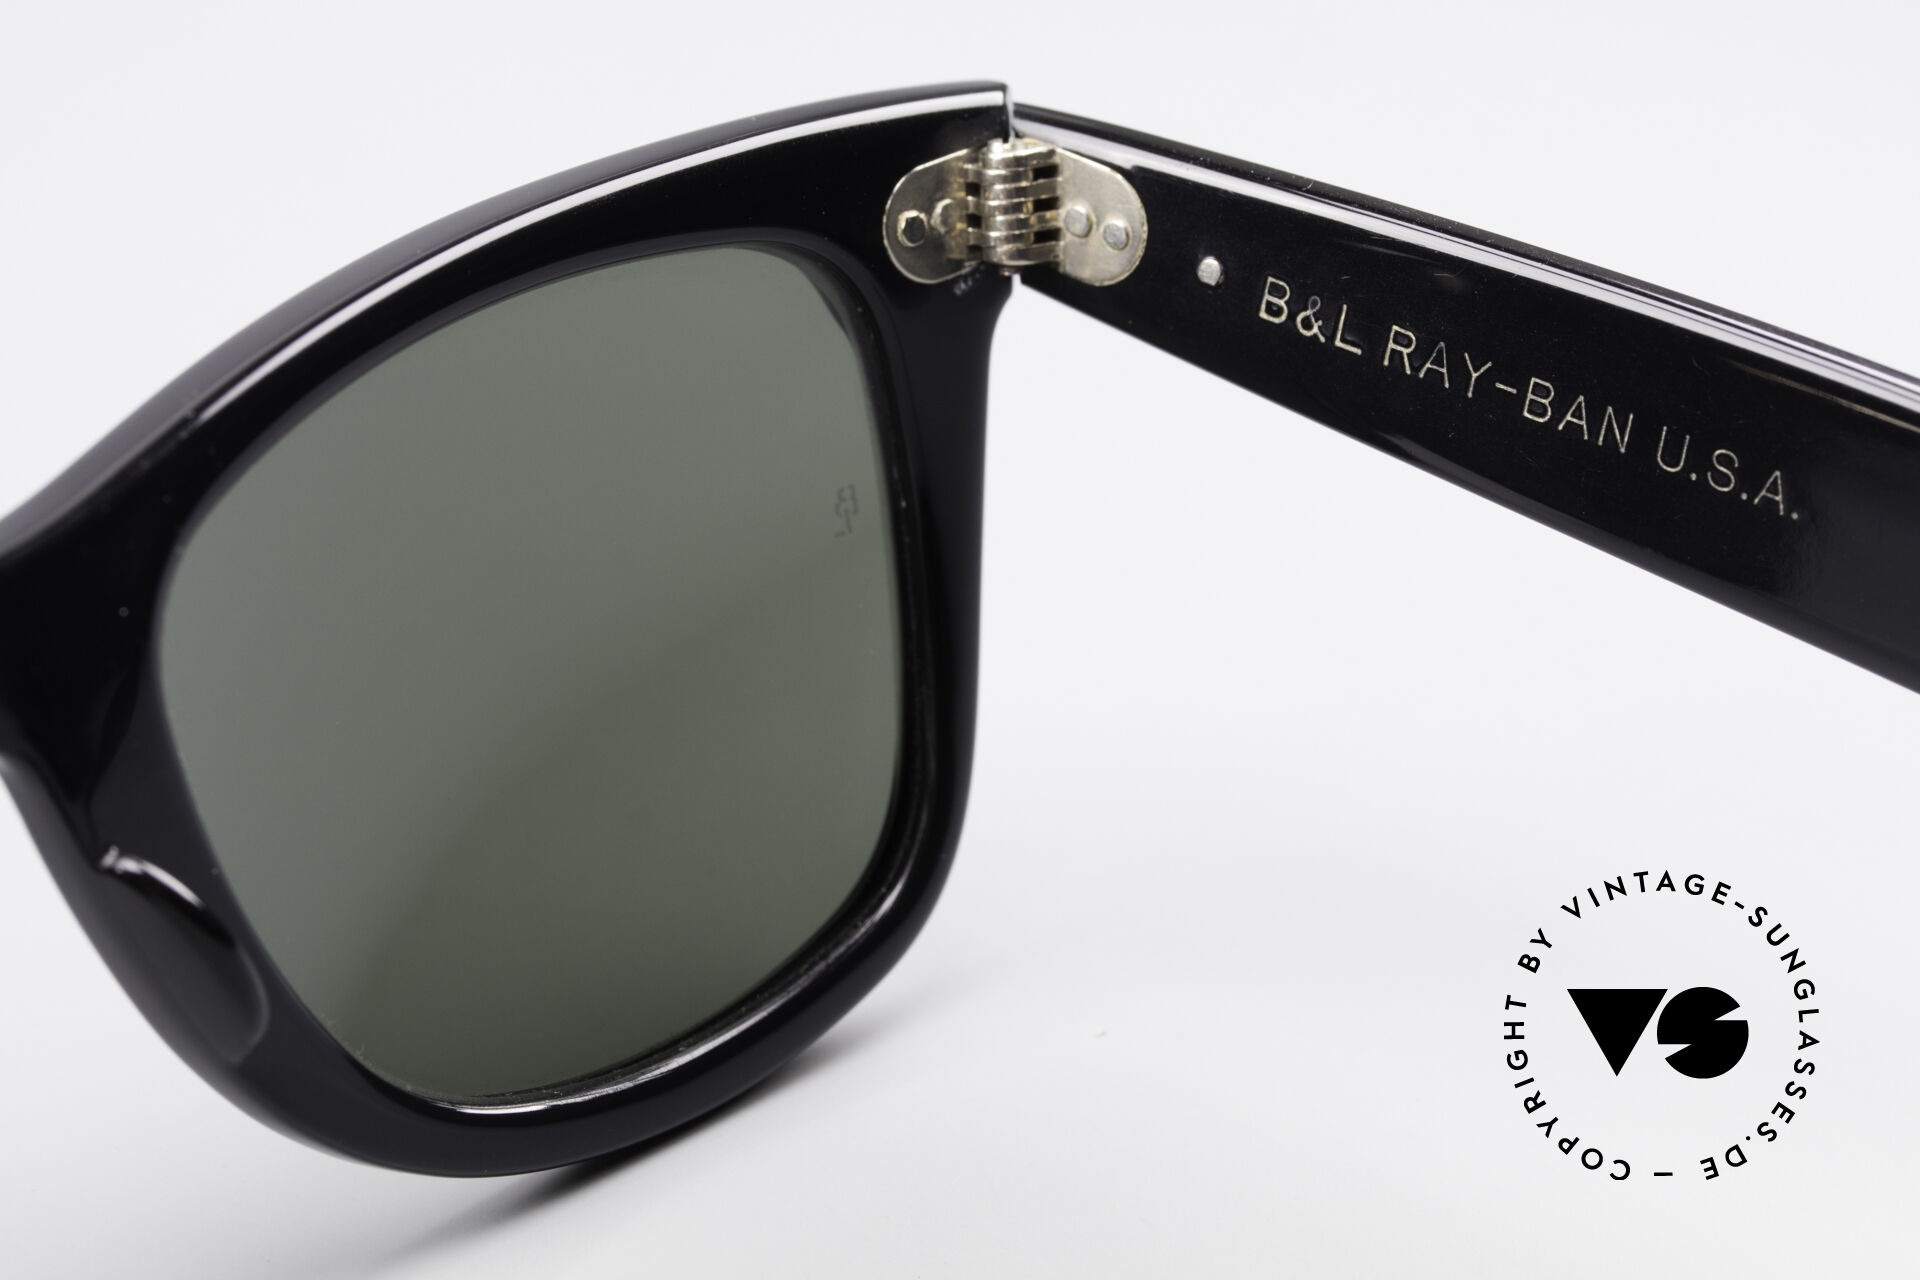 Ray Ban Wayfarer I Old 80's USA Sunglasses B&L